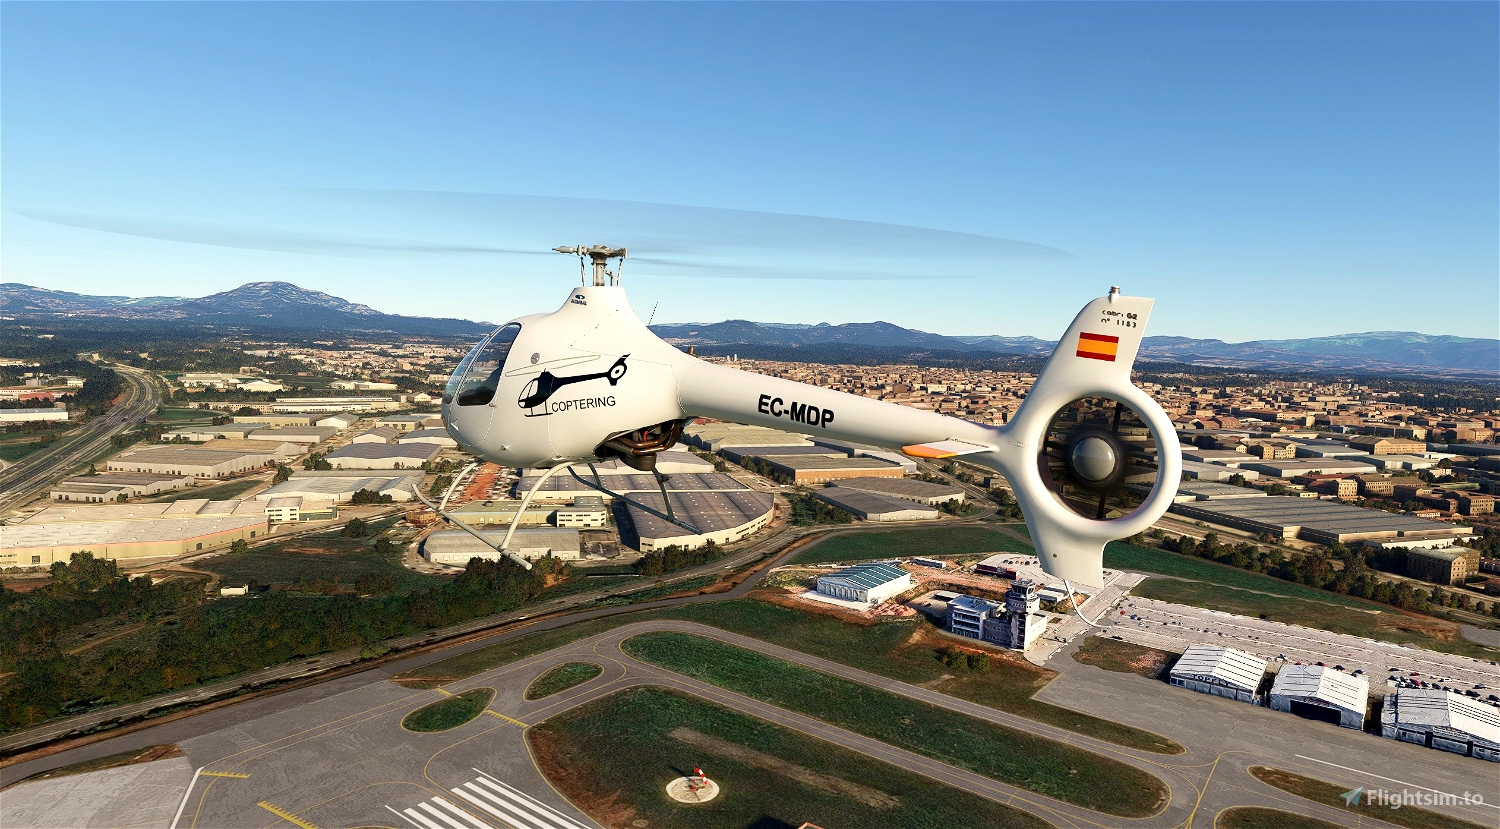 Quest Diagnostics N338QD - Cargo, SimWorks Studios PC-12 [4K] for  Microsoft Flight Simulator